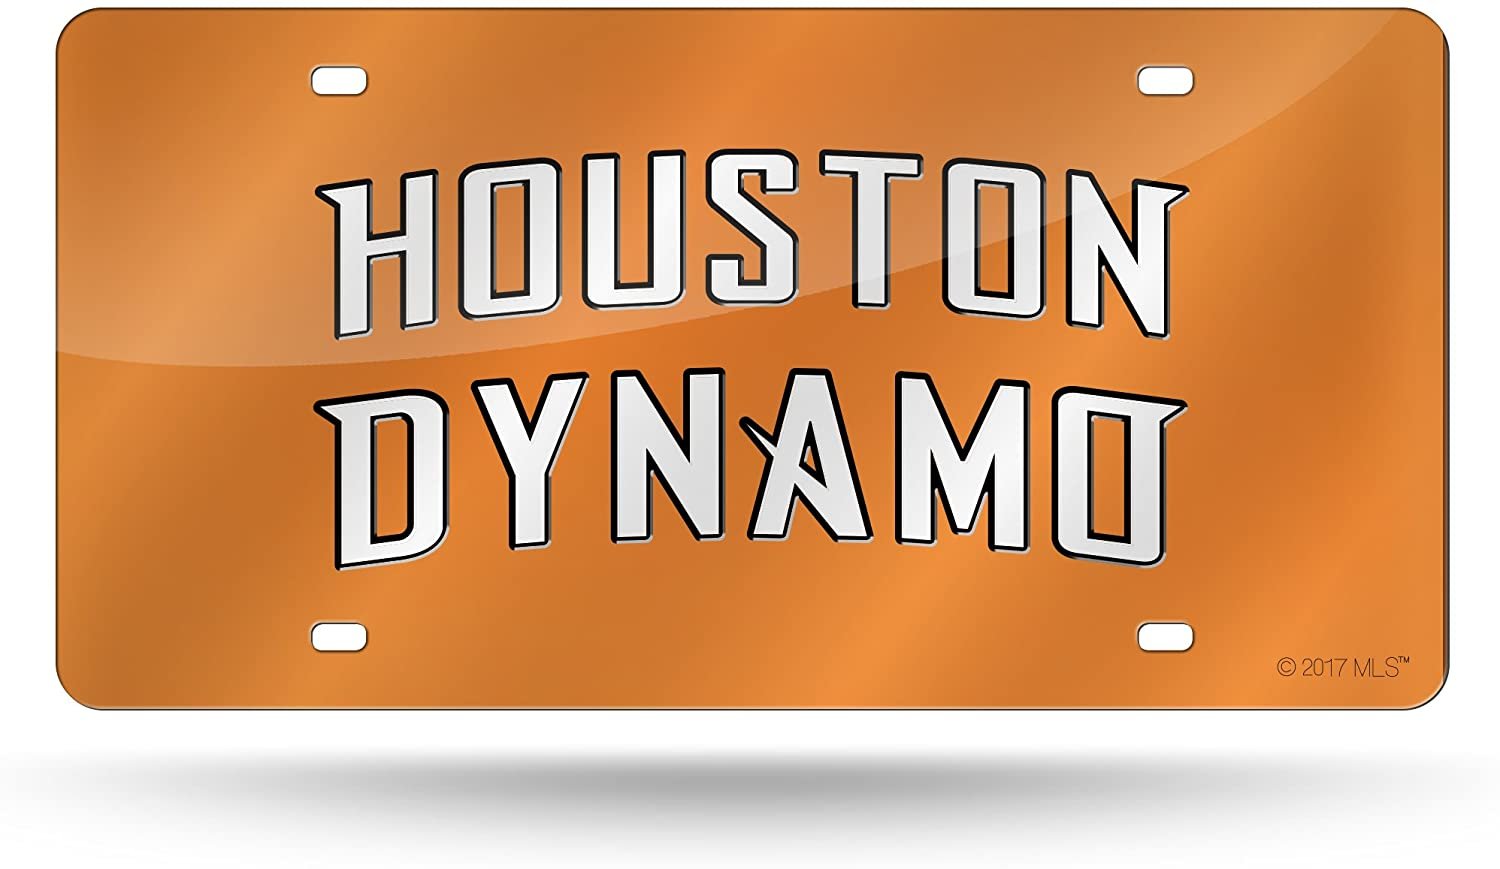 Houston Dynamo MLS Premium Laser Cut Tag License Plate, Orange Mirrored Acrylic Inlaid, 12x6 Inch